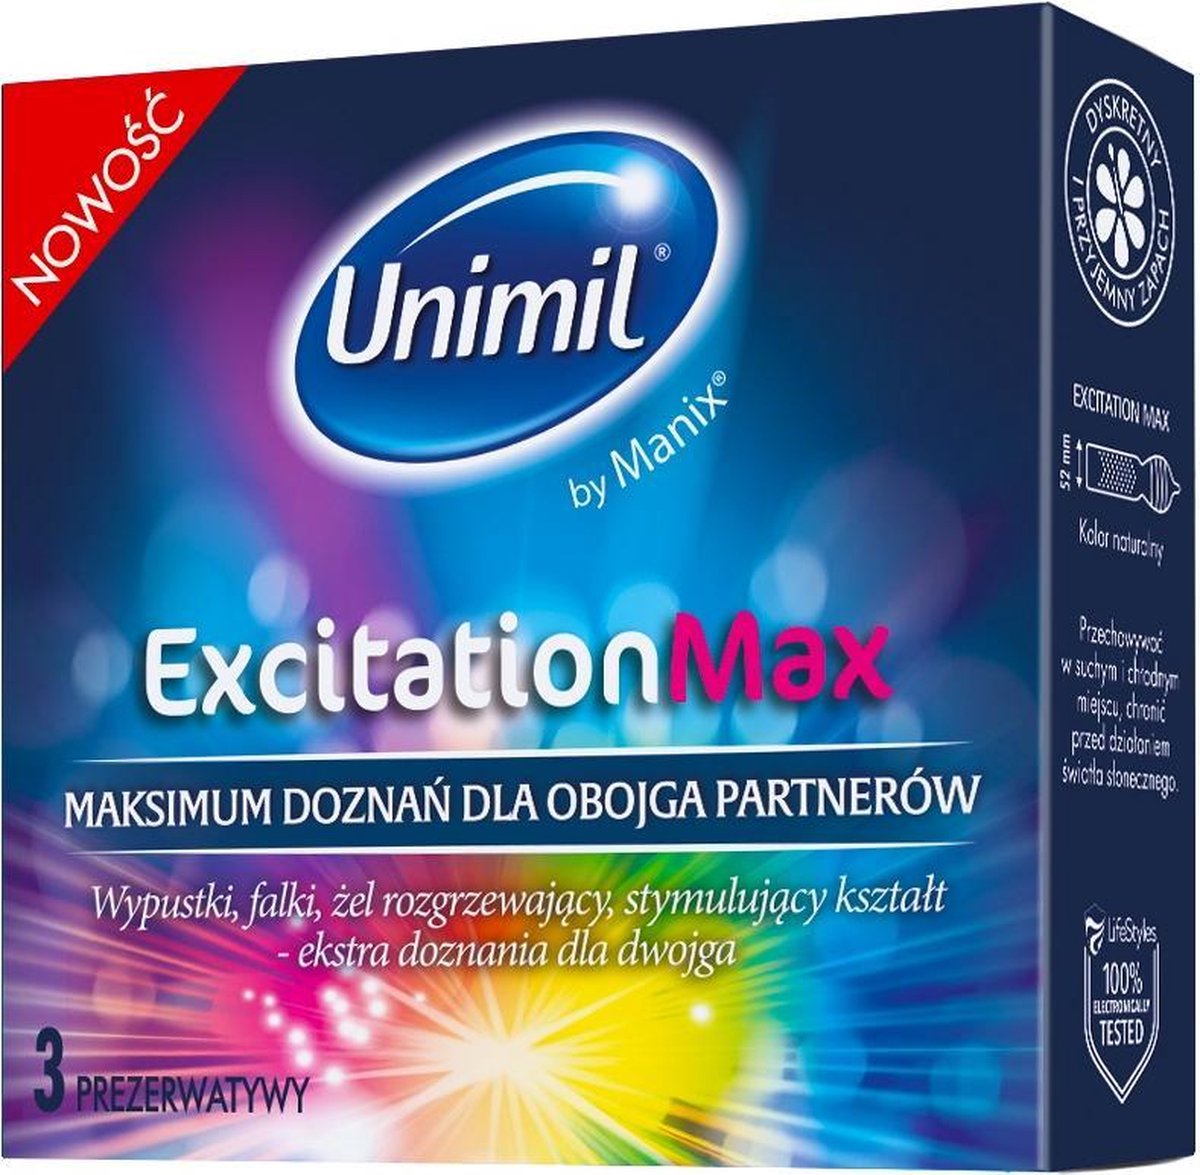 Unimil - Excitation Max Condoms 3Pcs